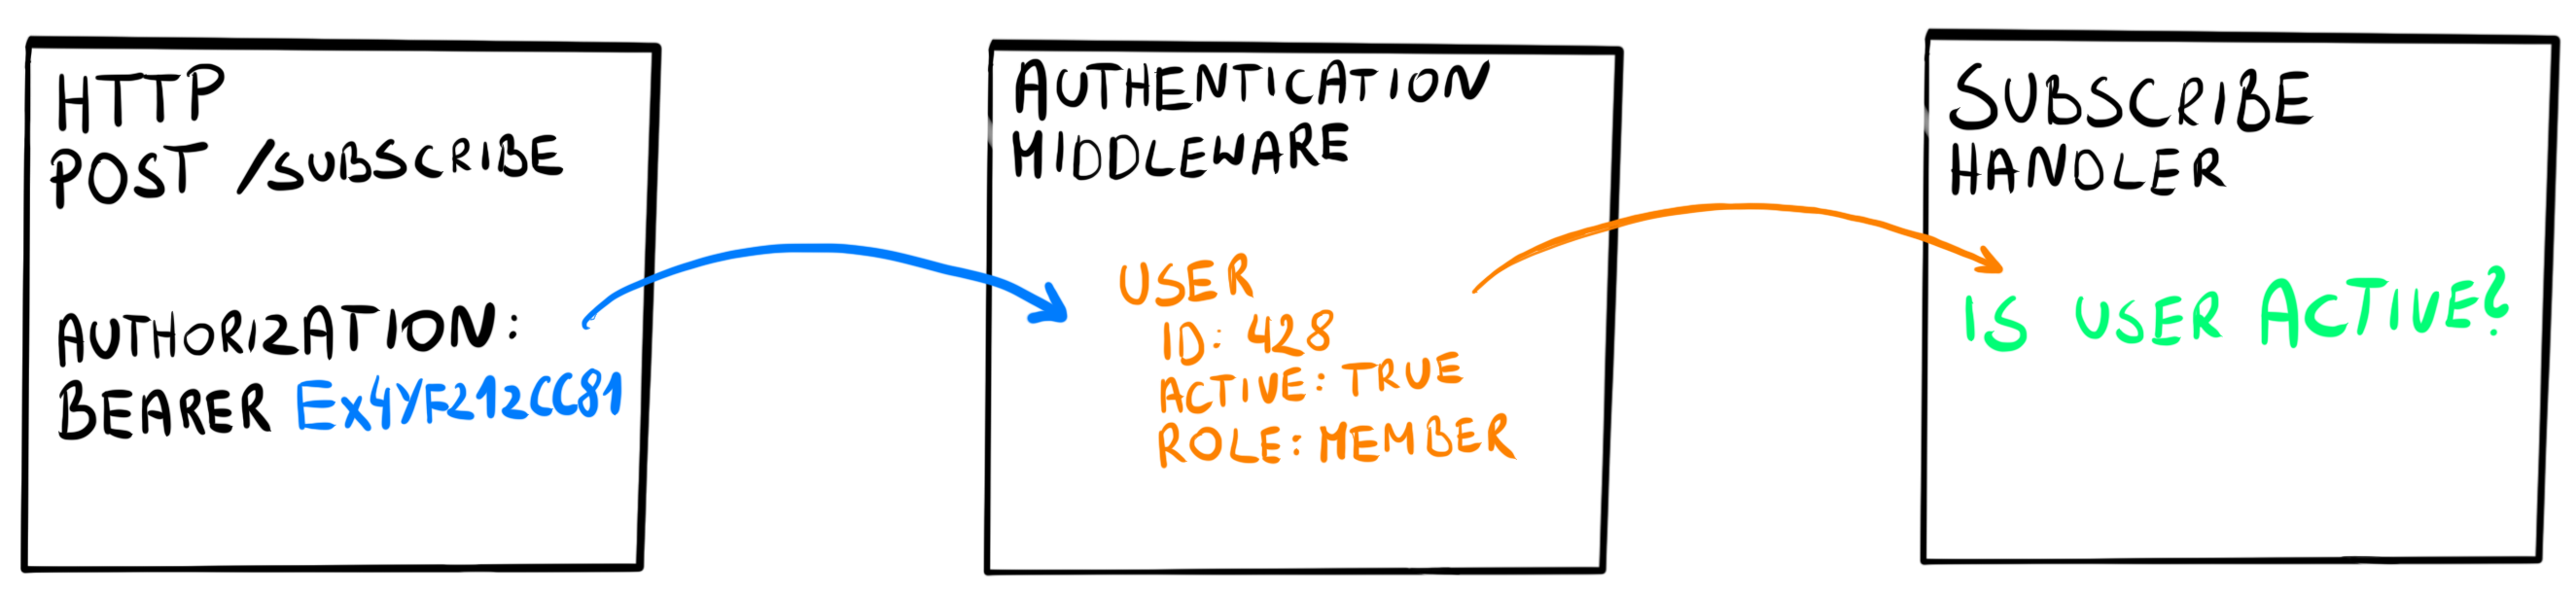 Authorization middleware